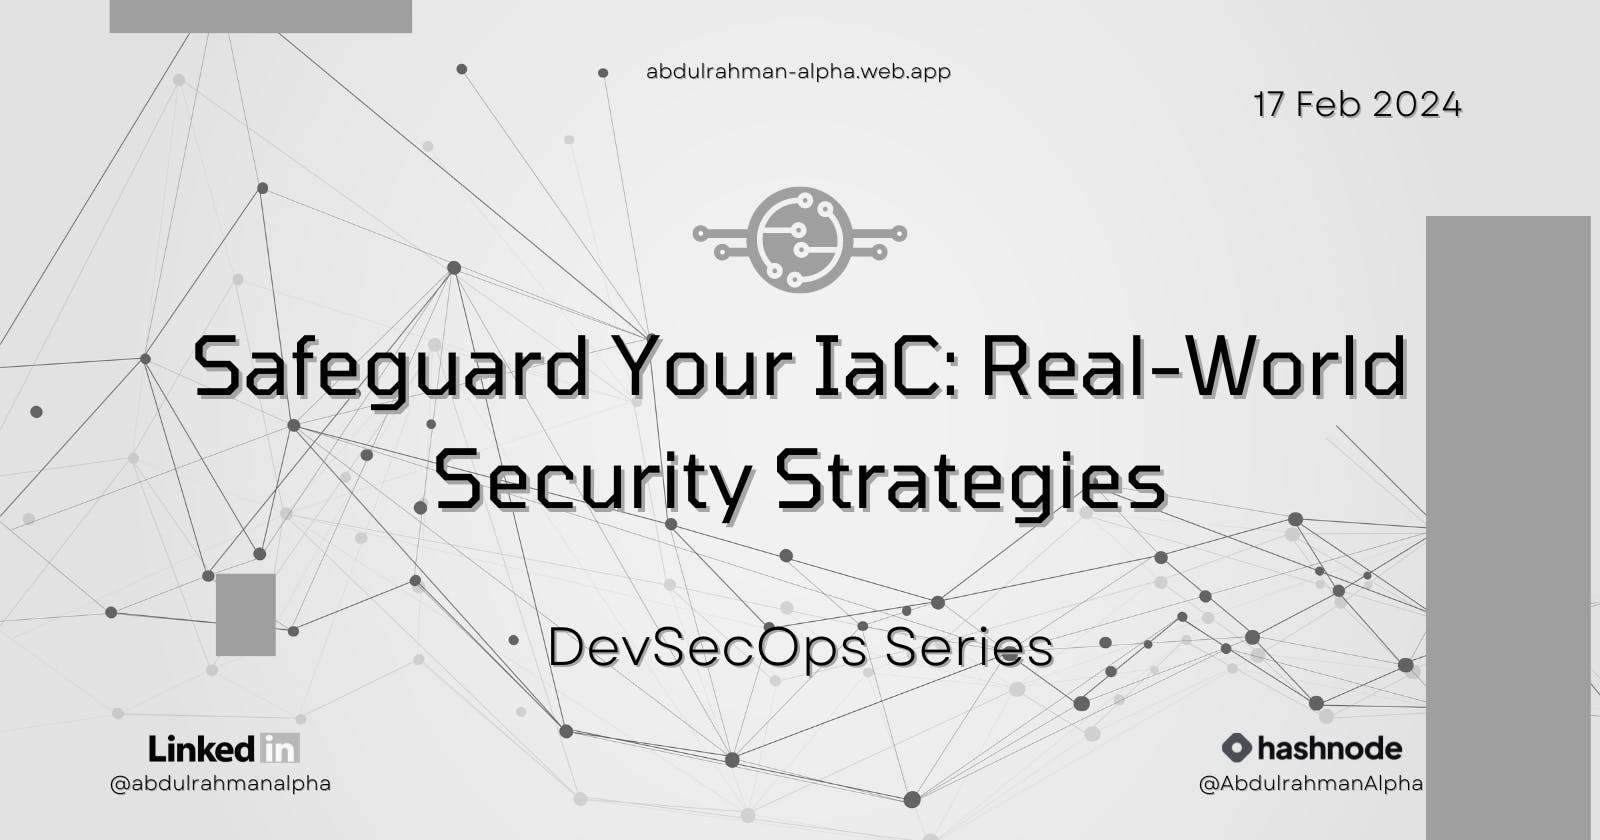 Safeguard Your IaC: Real-World Security Strategies